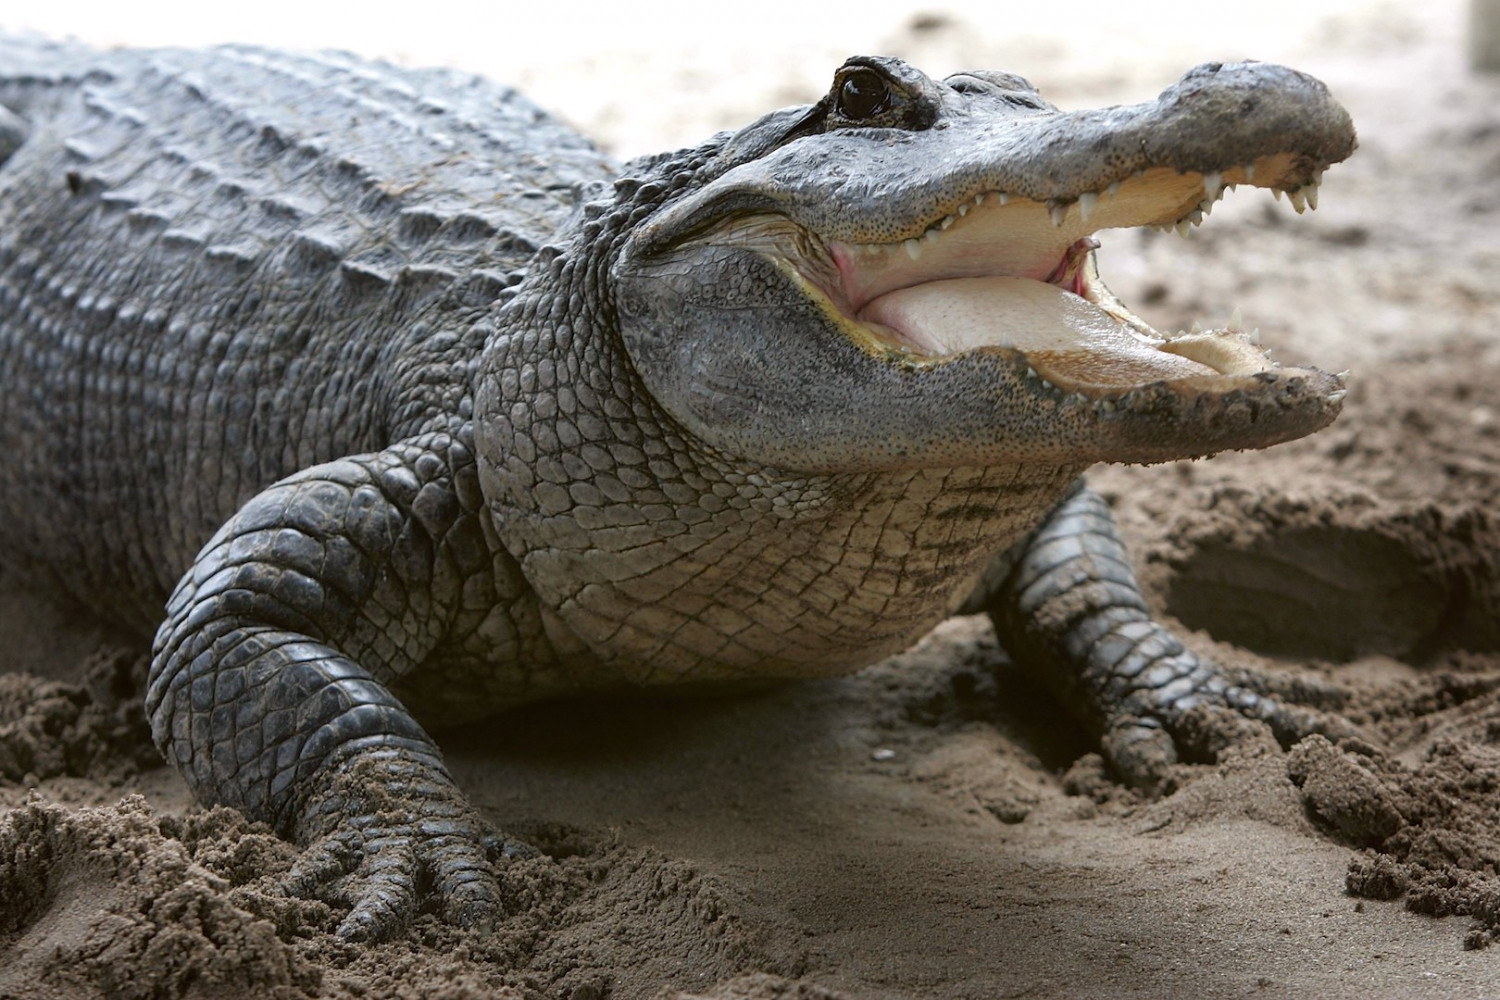 Massive 12 Foot 500 Pound Alligator Captured Alive In Florida 2616